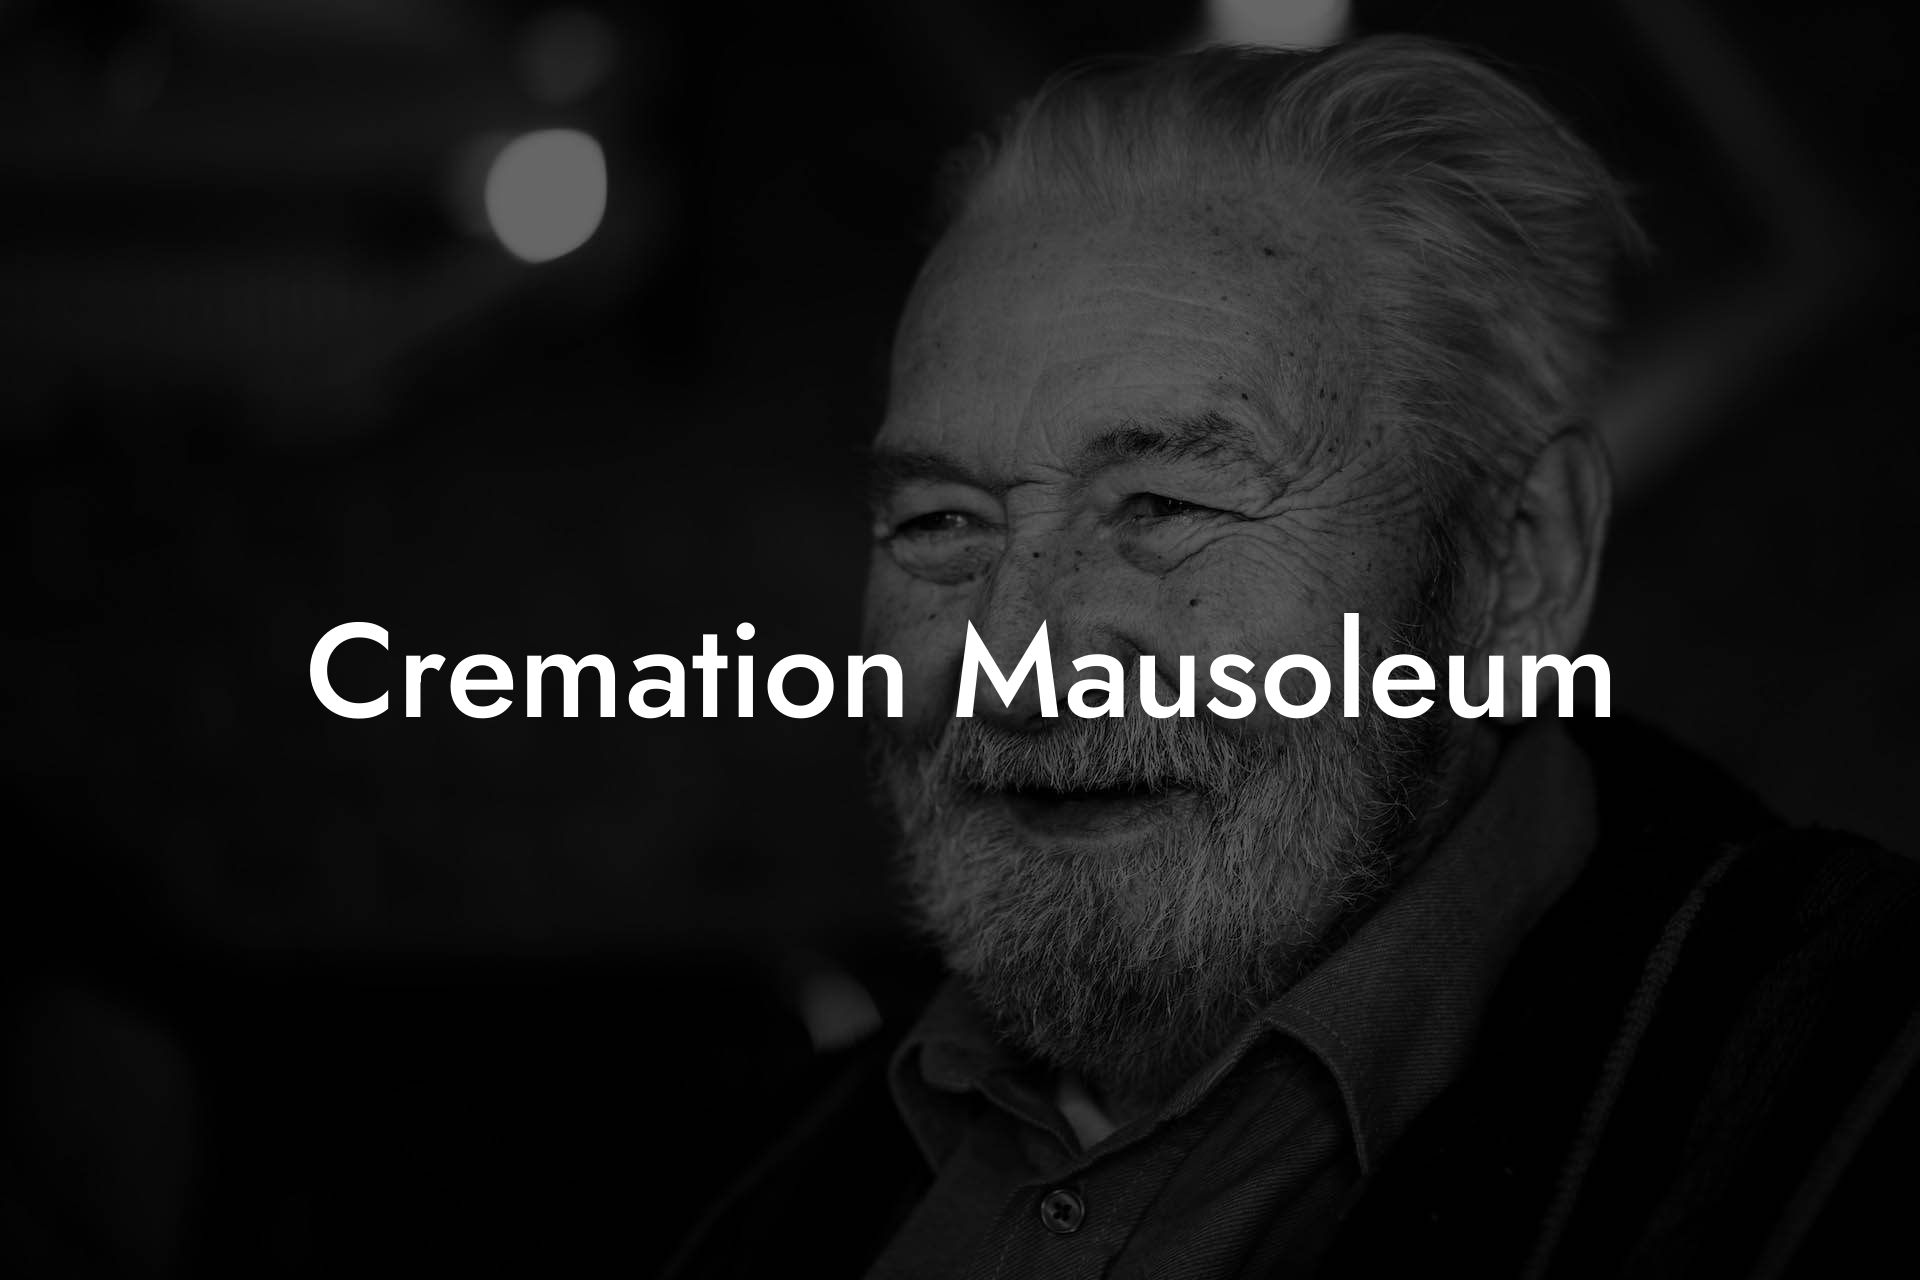 Cremation Mausoleum